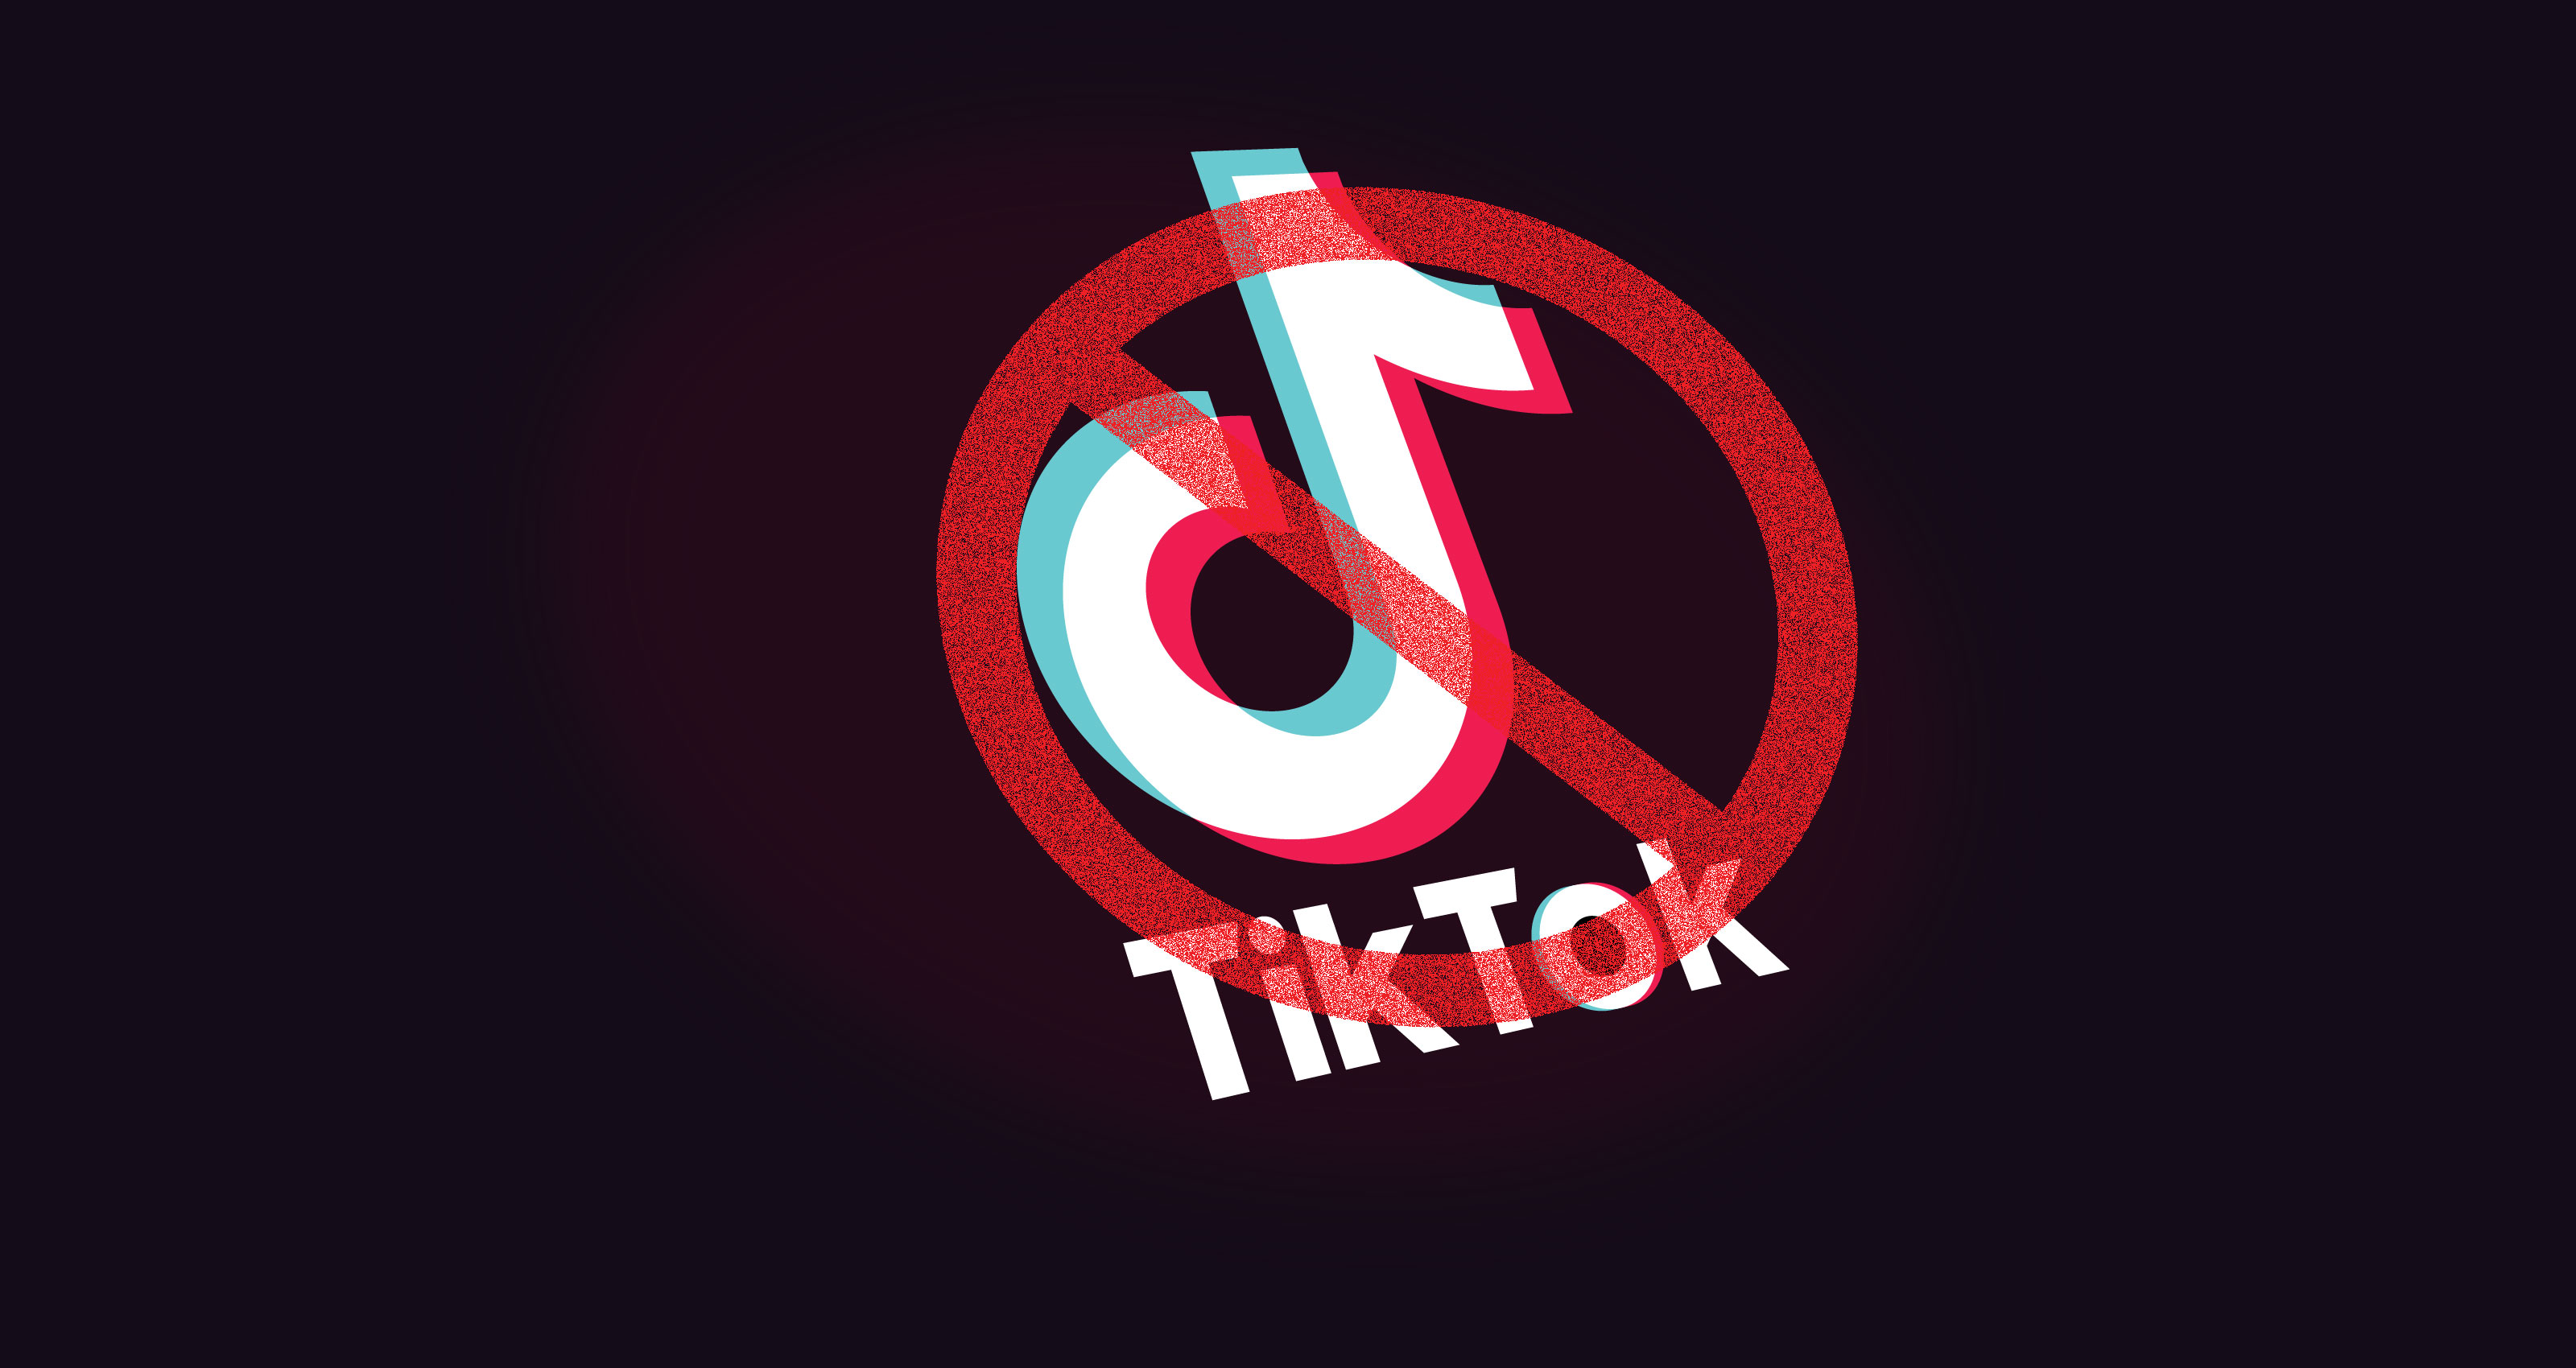 U.S. government considering a ban on TikTok